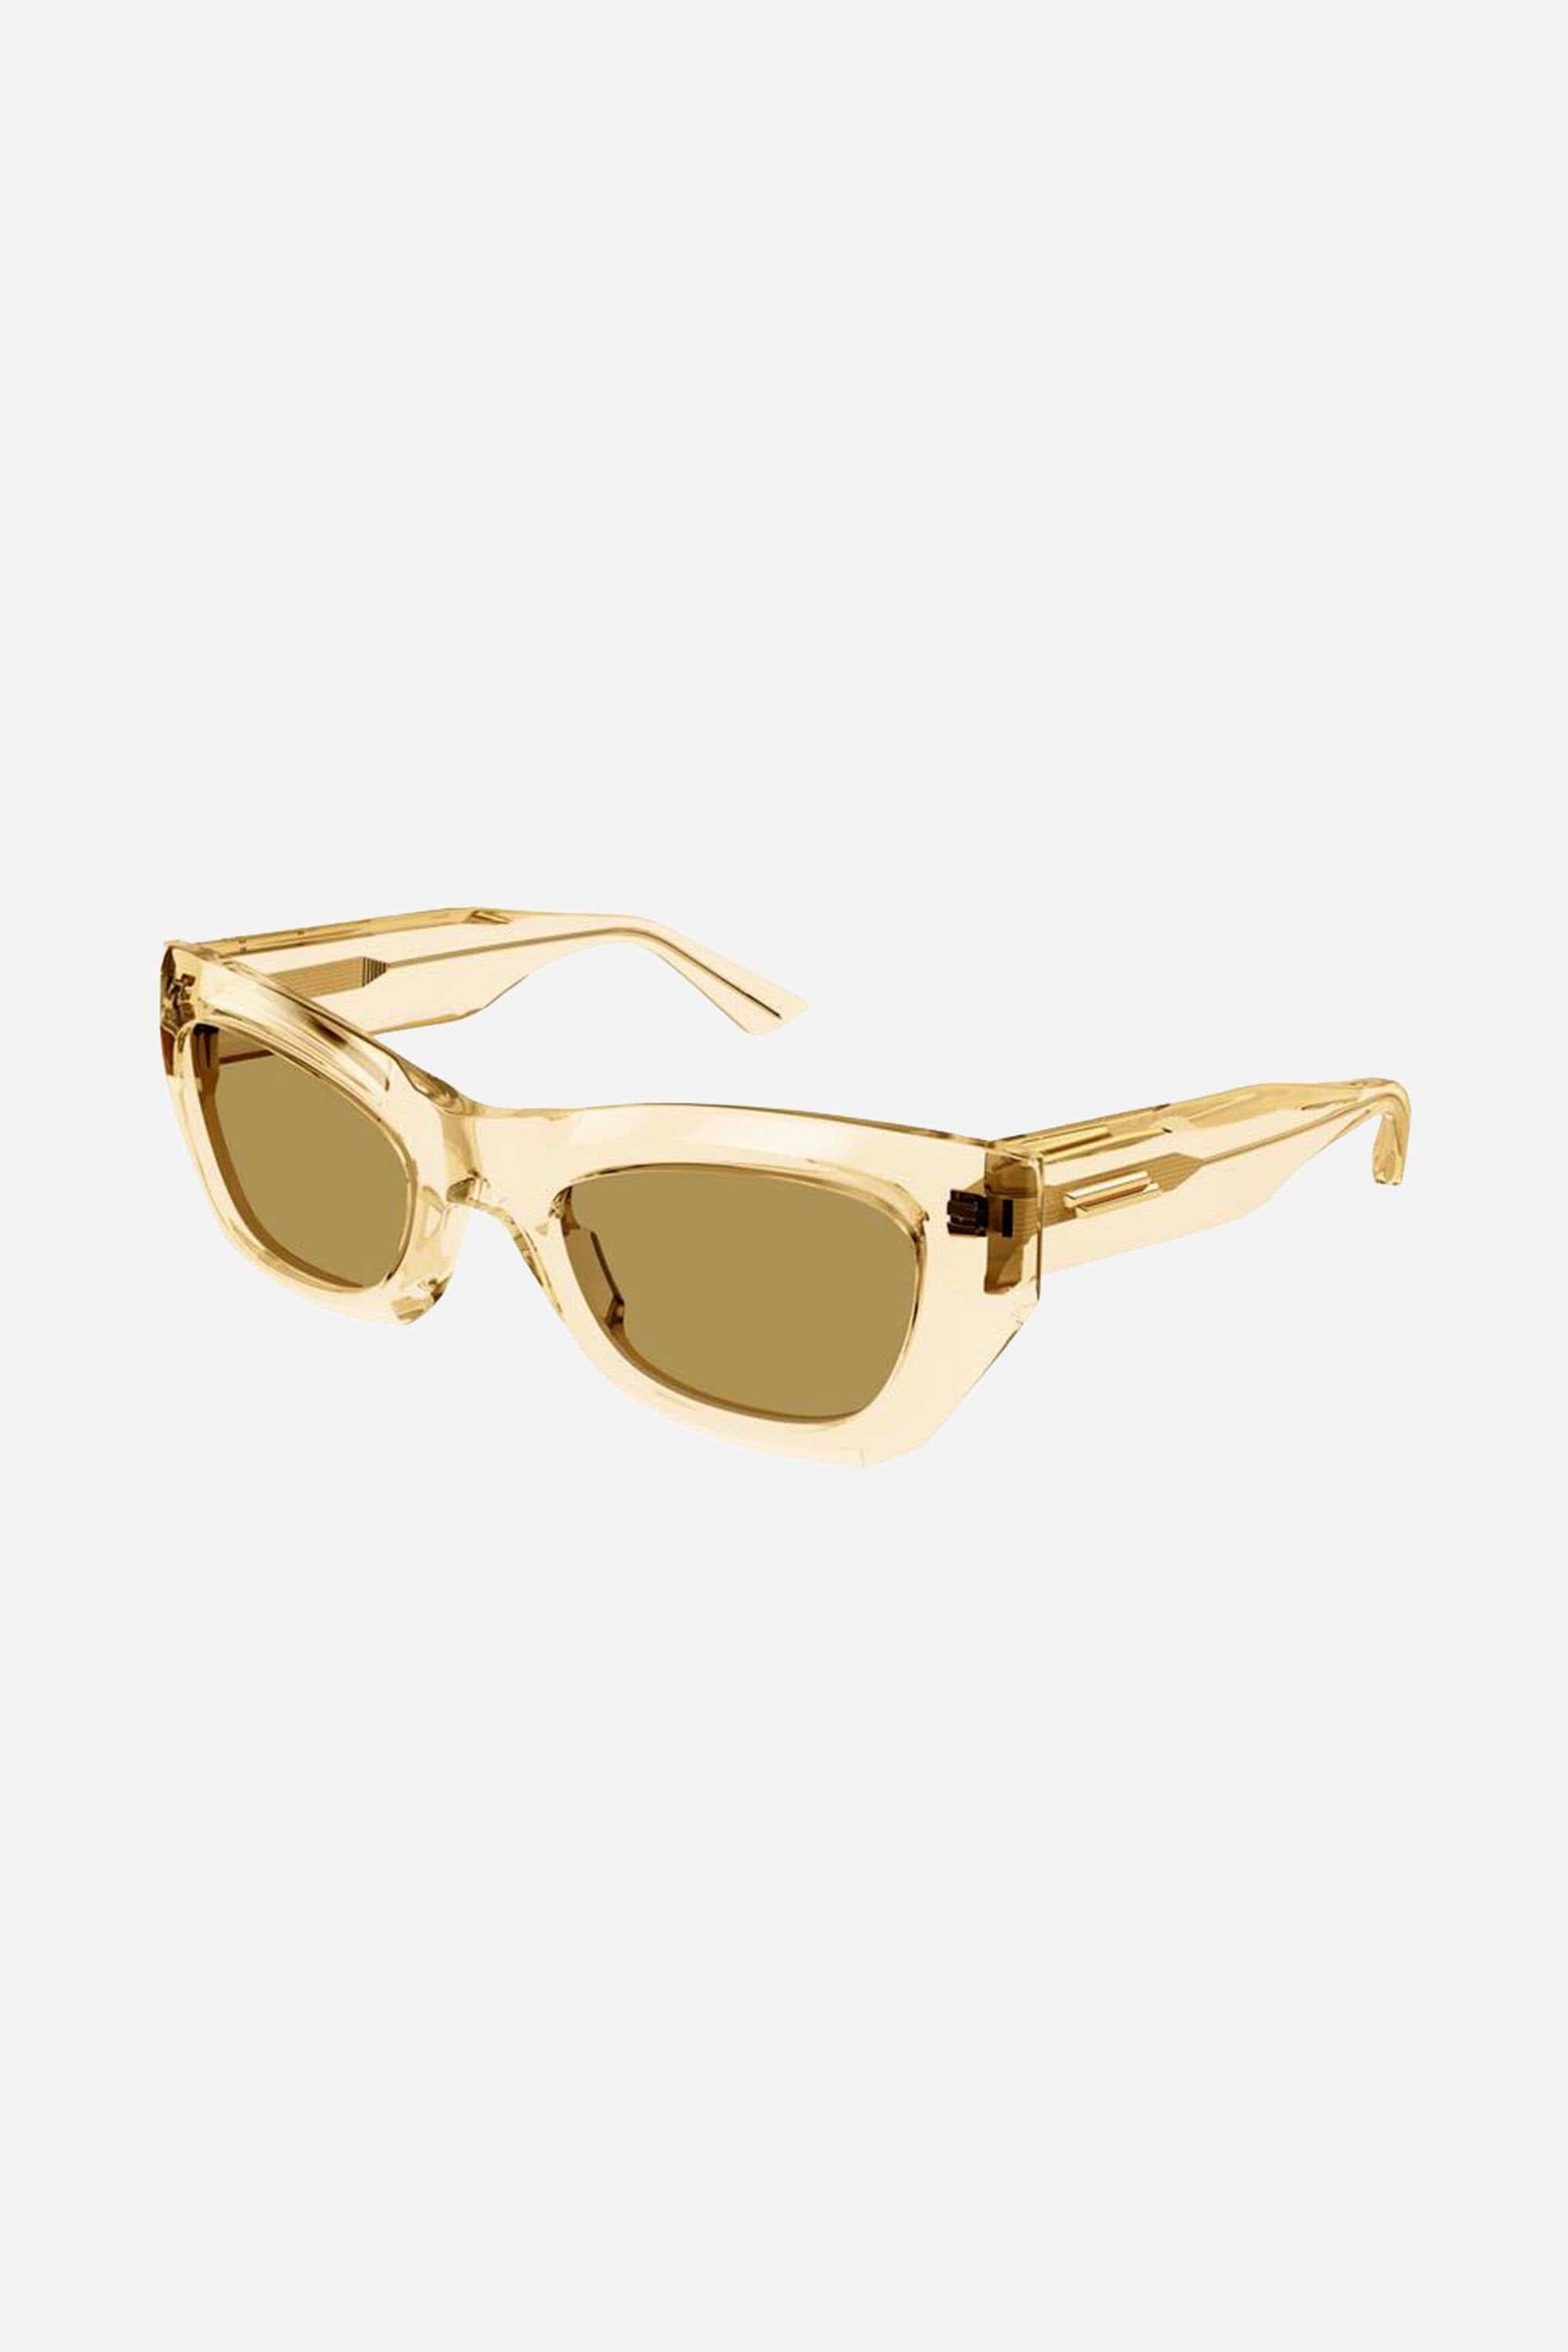 Bottega Veneta bold wrap yellow sunglasses - Eyewear Club